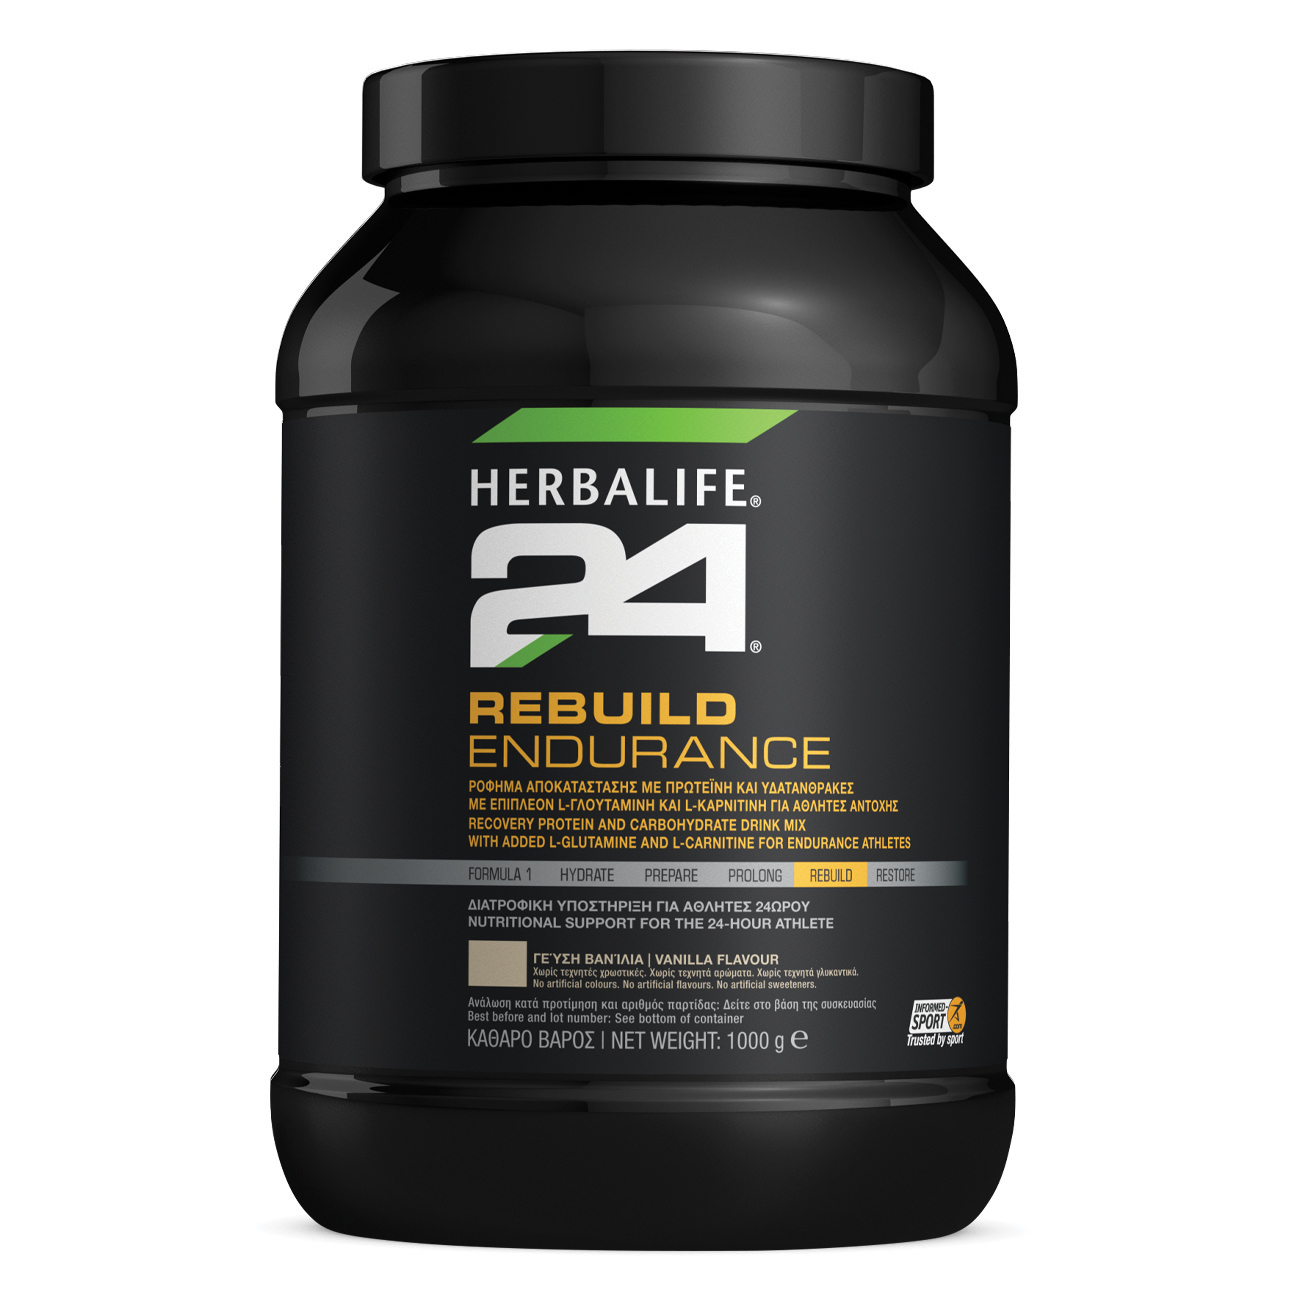 Herbalife24® Rebuild Endurance Πρωτεϊνούχο Ρόφημα Αποκατάστασης με Γεύση Βανίλια product shot